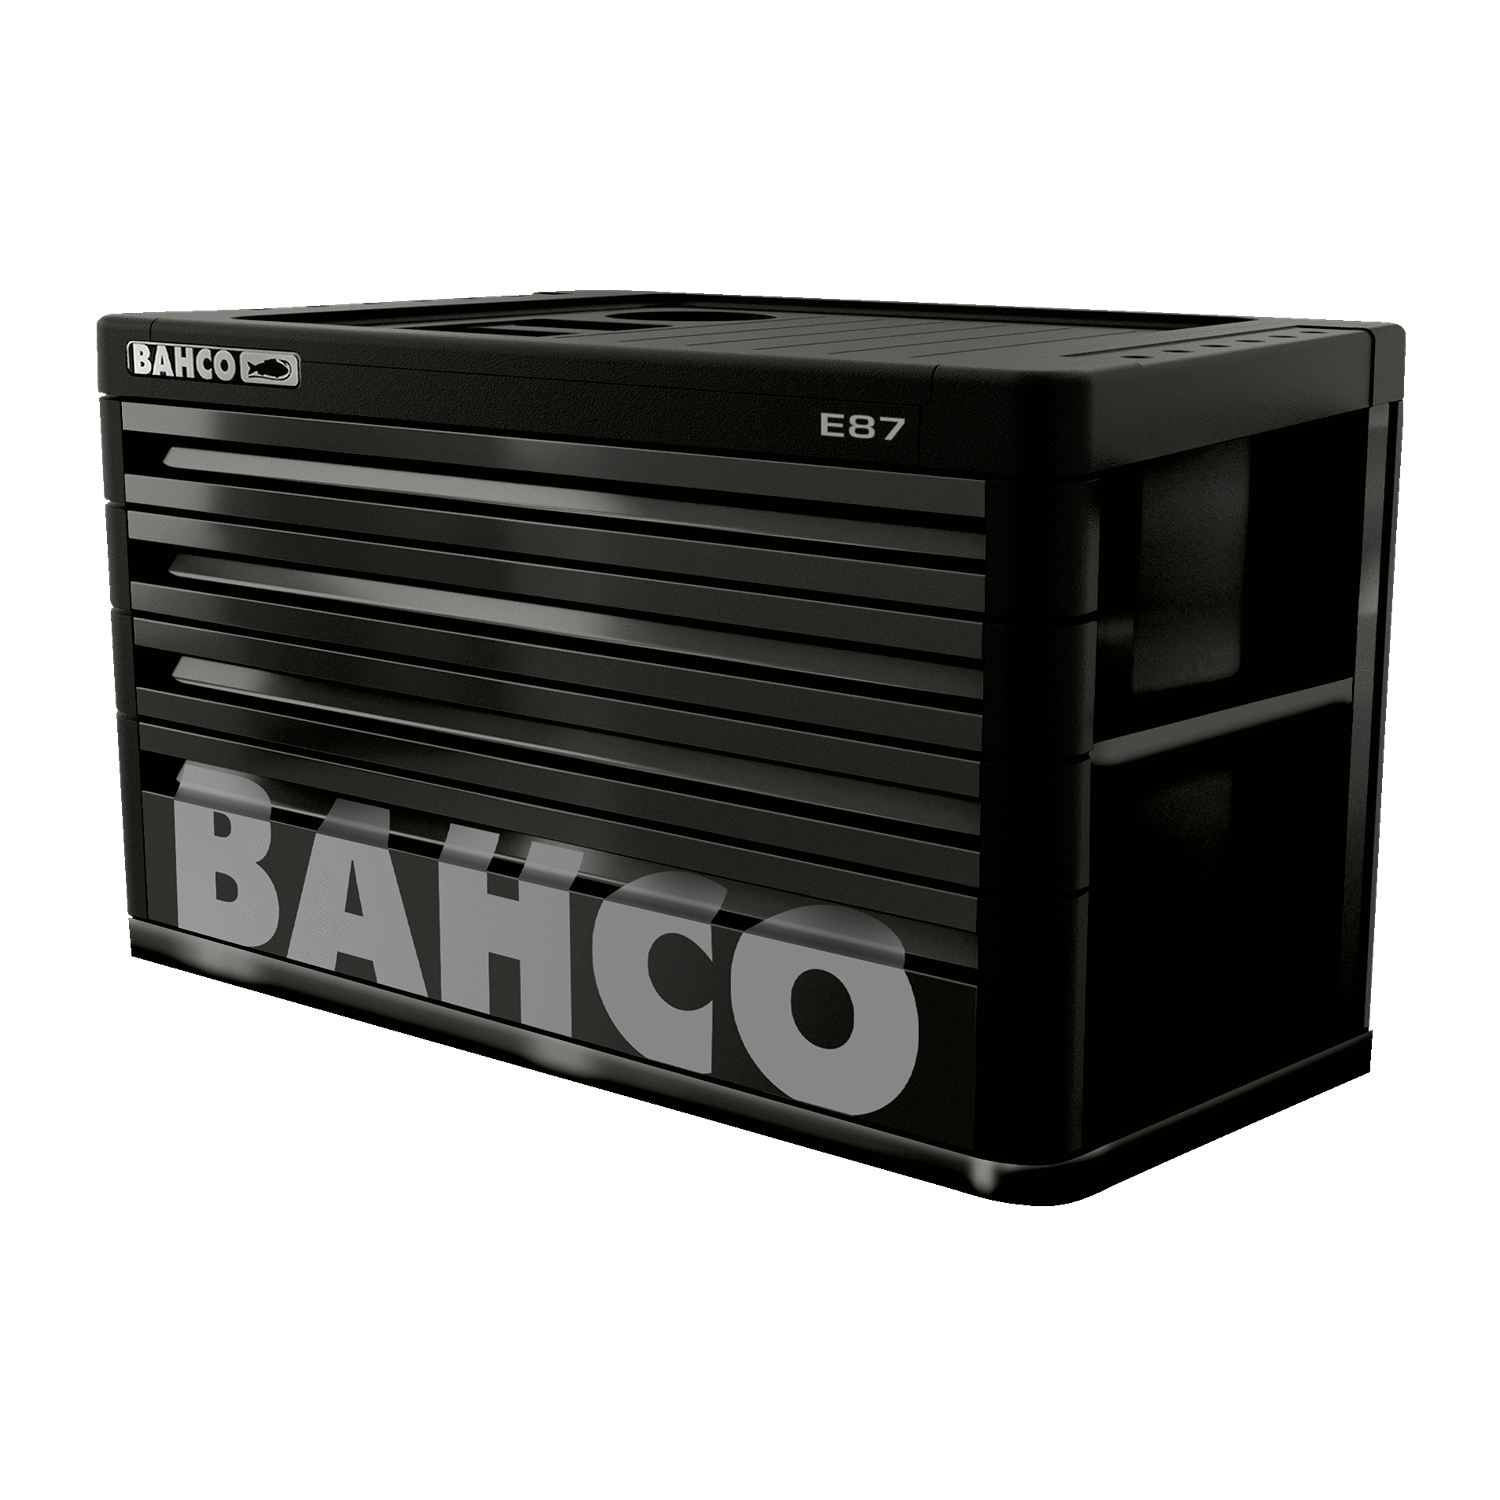 BAHCO 1487K4 Premium E87 Storage HUB Top Chests with 4-Drawers - Premium Storage HUB from BAHCO - Shop now at Yew Aik.